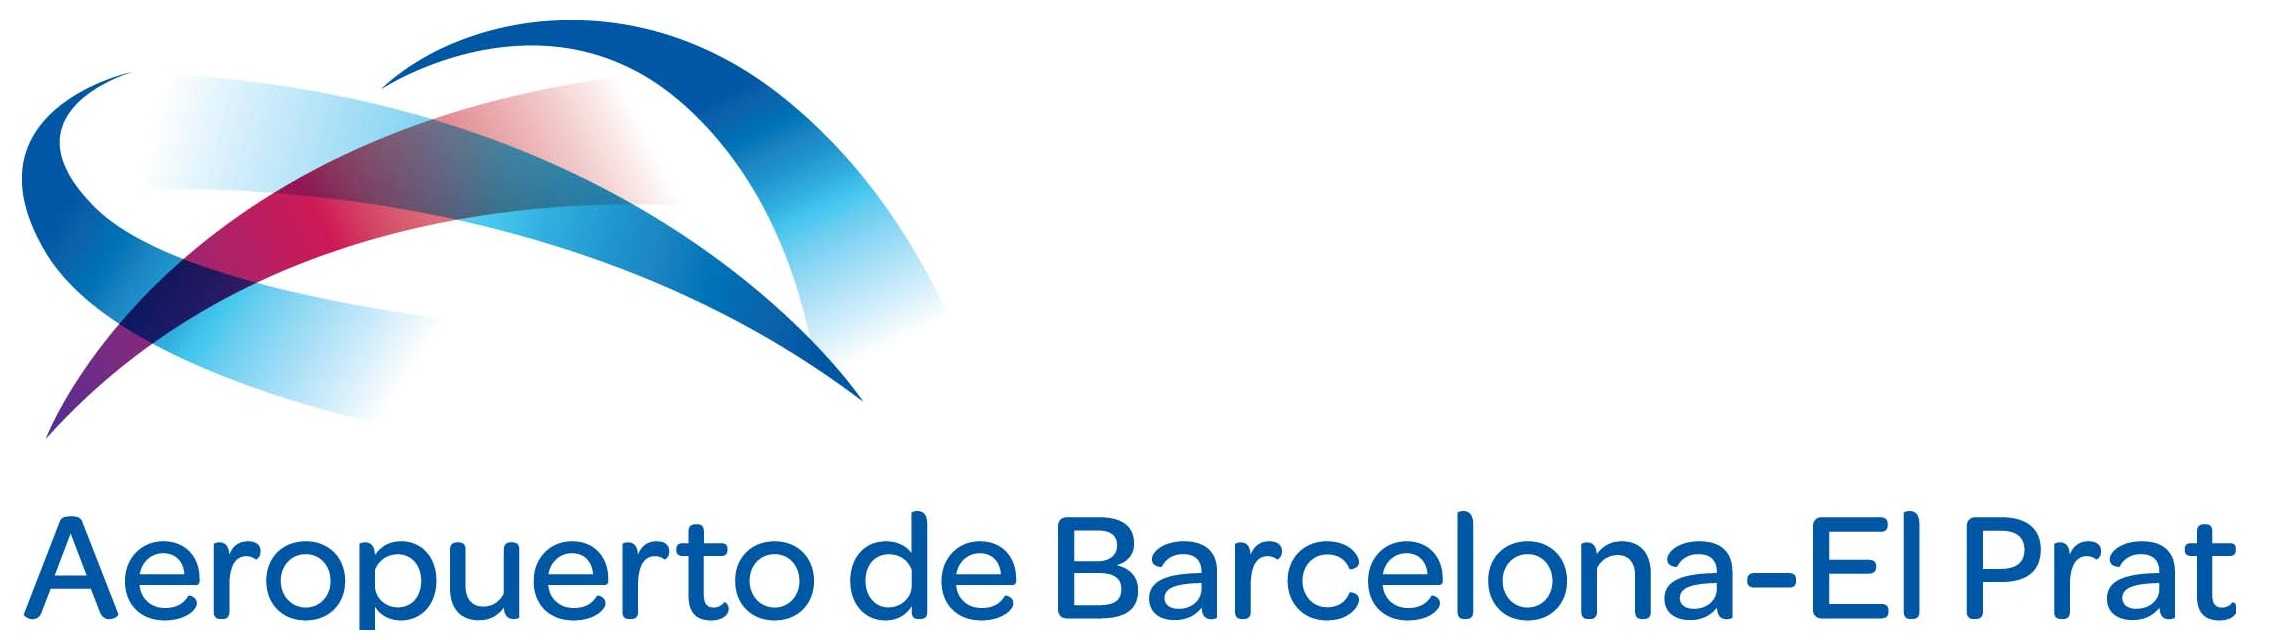 Barcelona–El Prat Airport Brand Logo